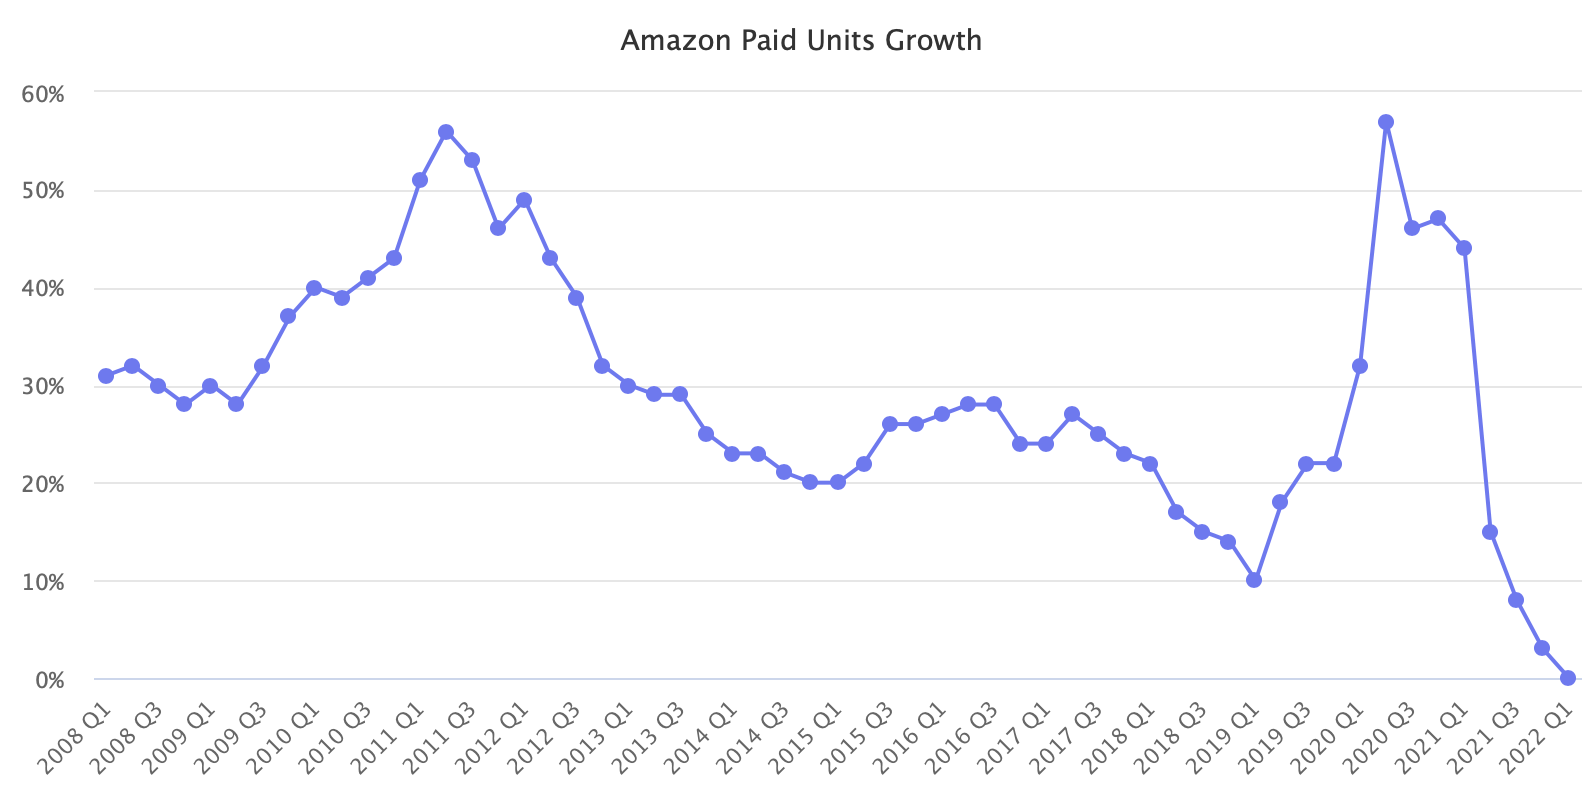 Amazon Paid Units Growth